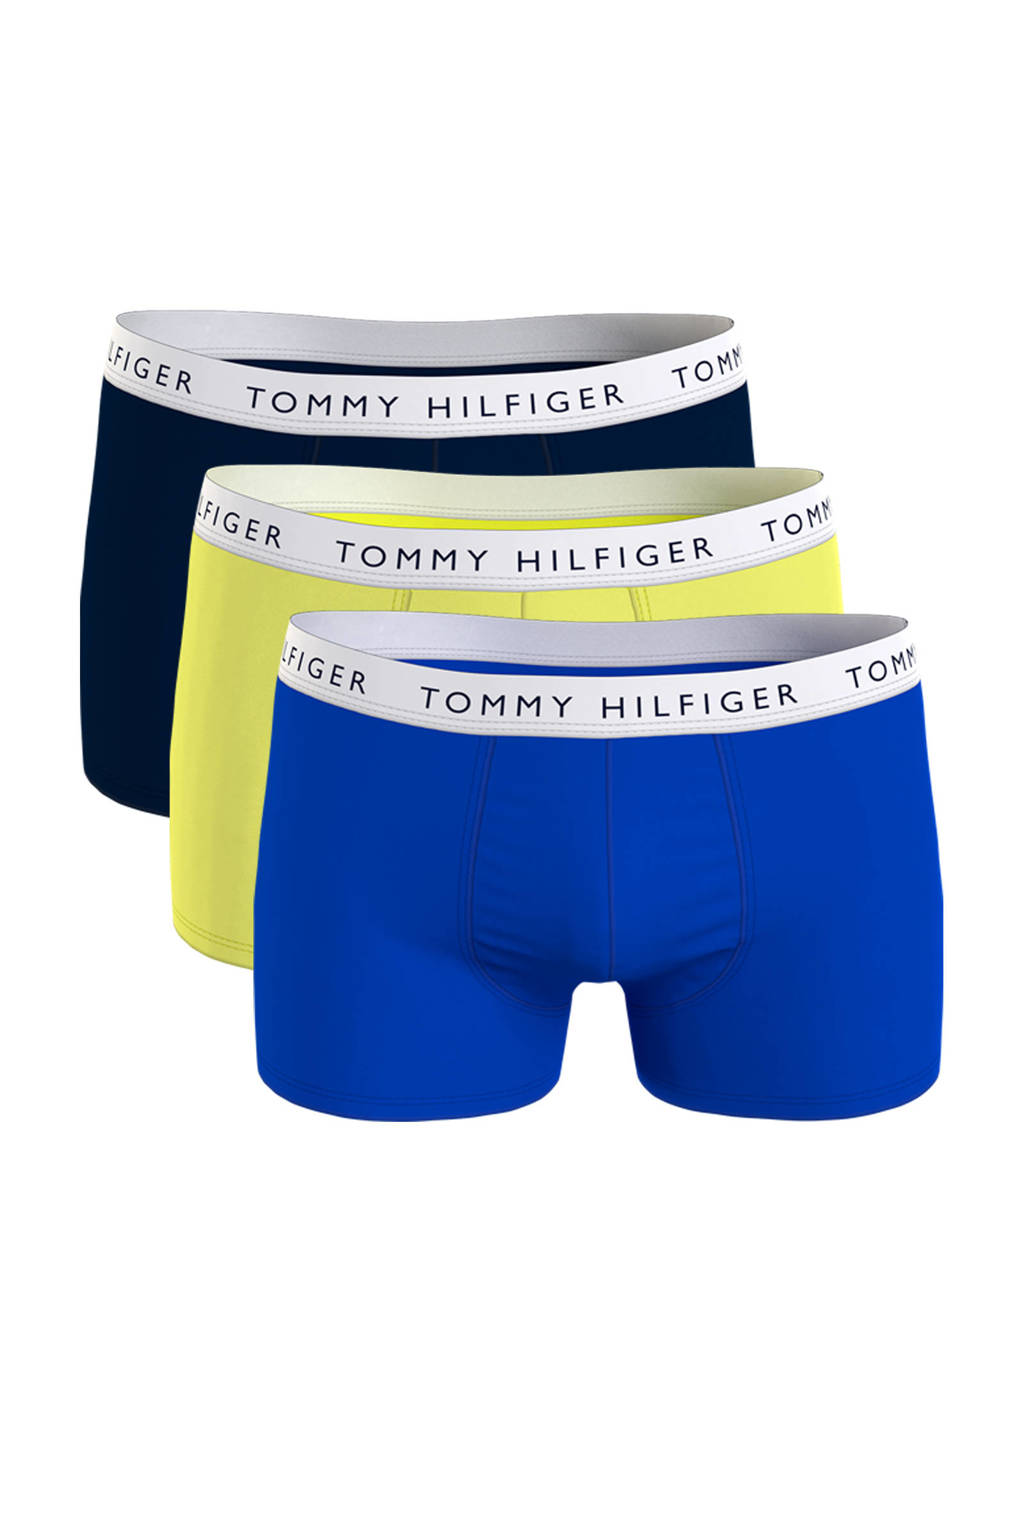 Tommy Hilfiger boxershort (set van 3), Blauw/geel/donkerblauw